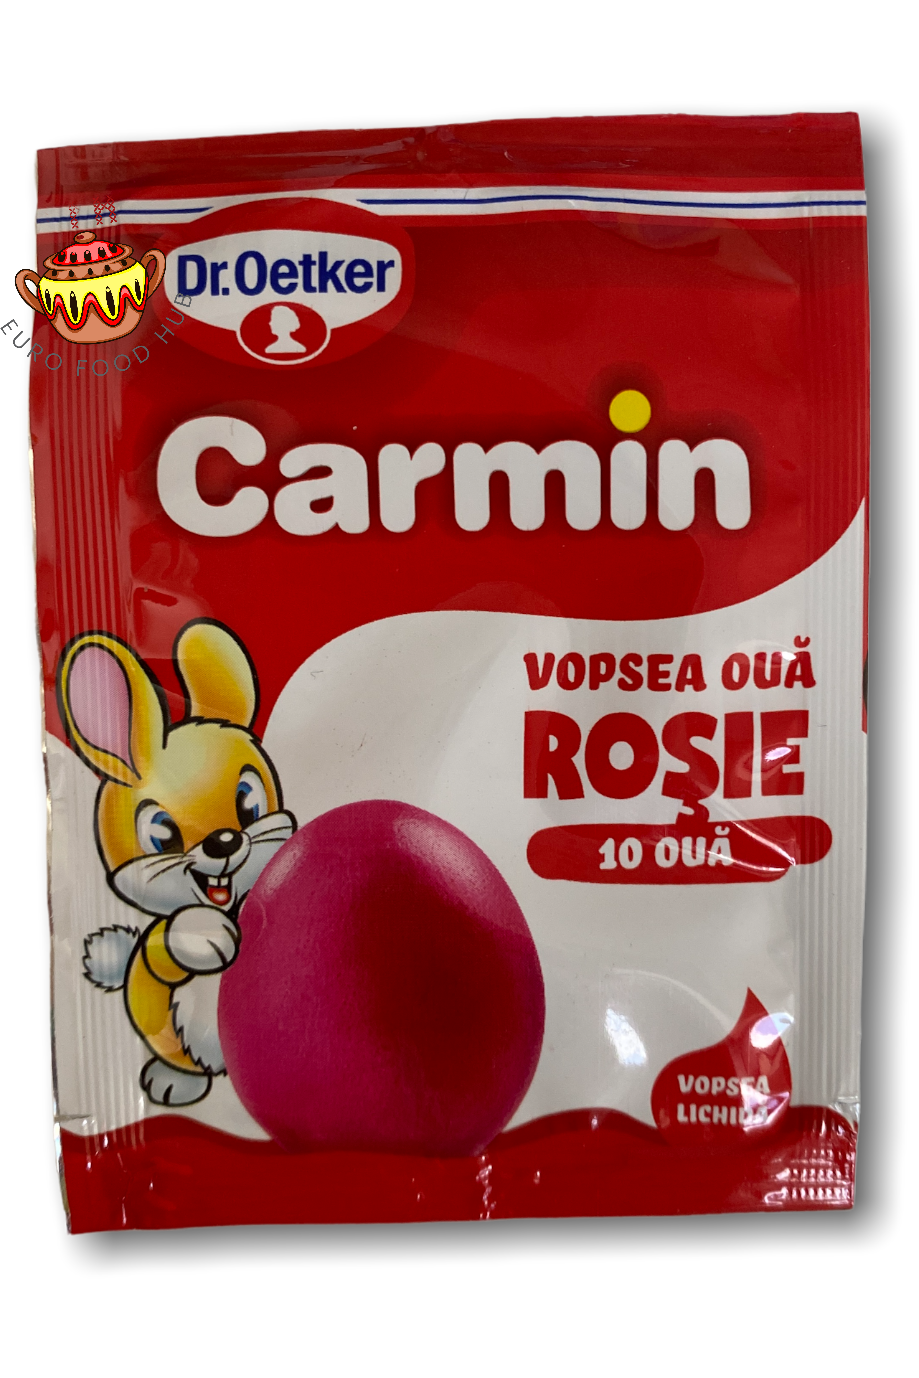 Dr. Oetker - Carmin - Vopsea Oua Rosie - Easter Egg Dye - RED - 5ml